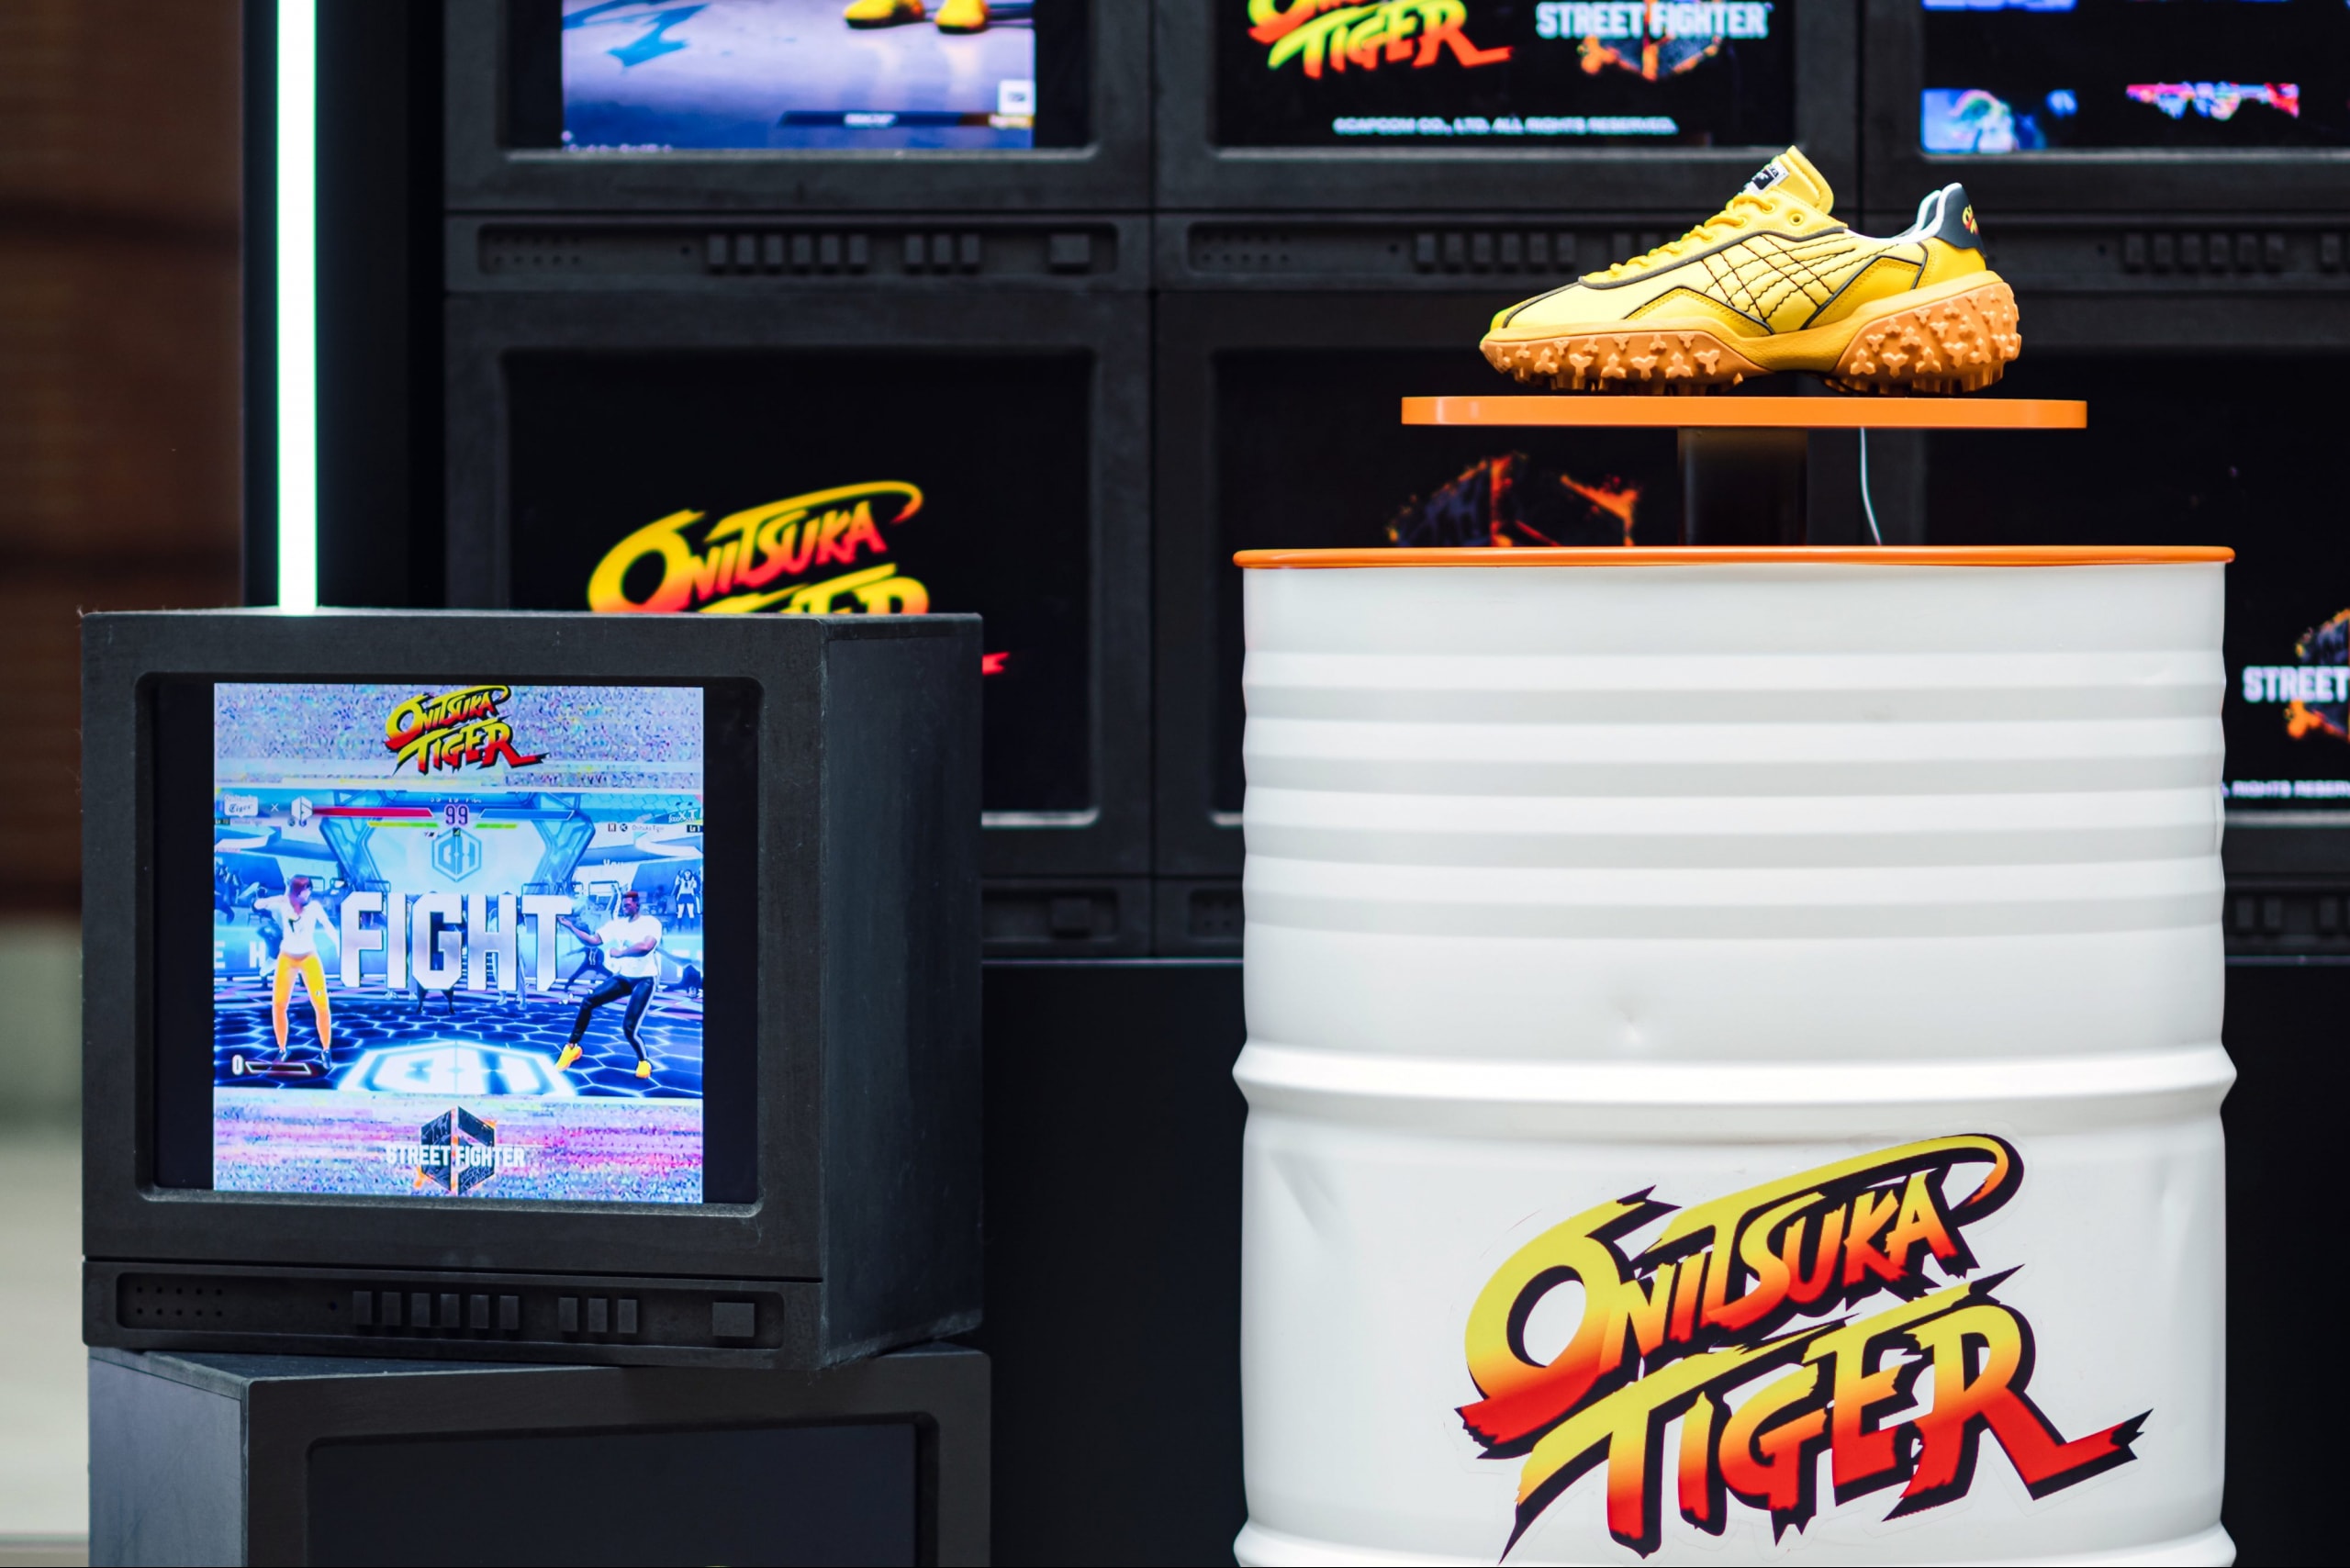 走进 Onitsuka Tiger x Street Fighter 限时发售活动